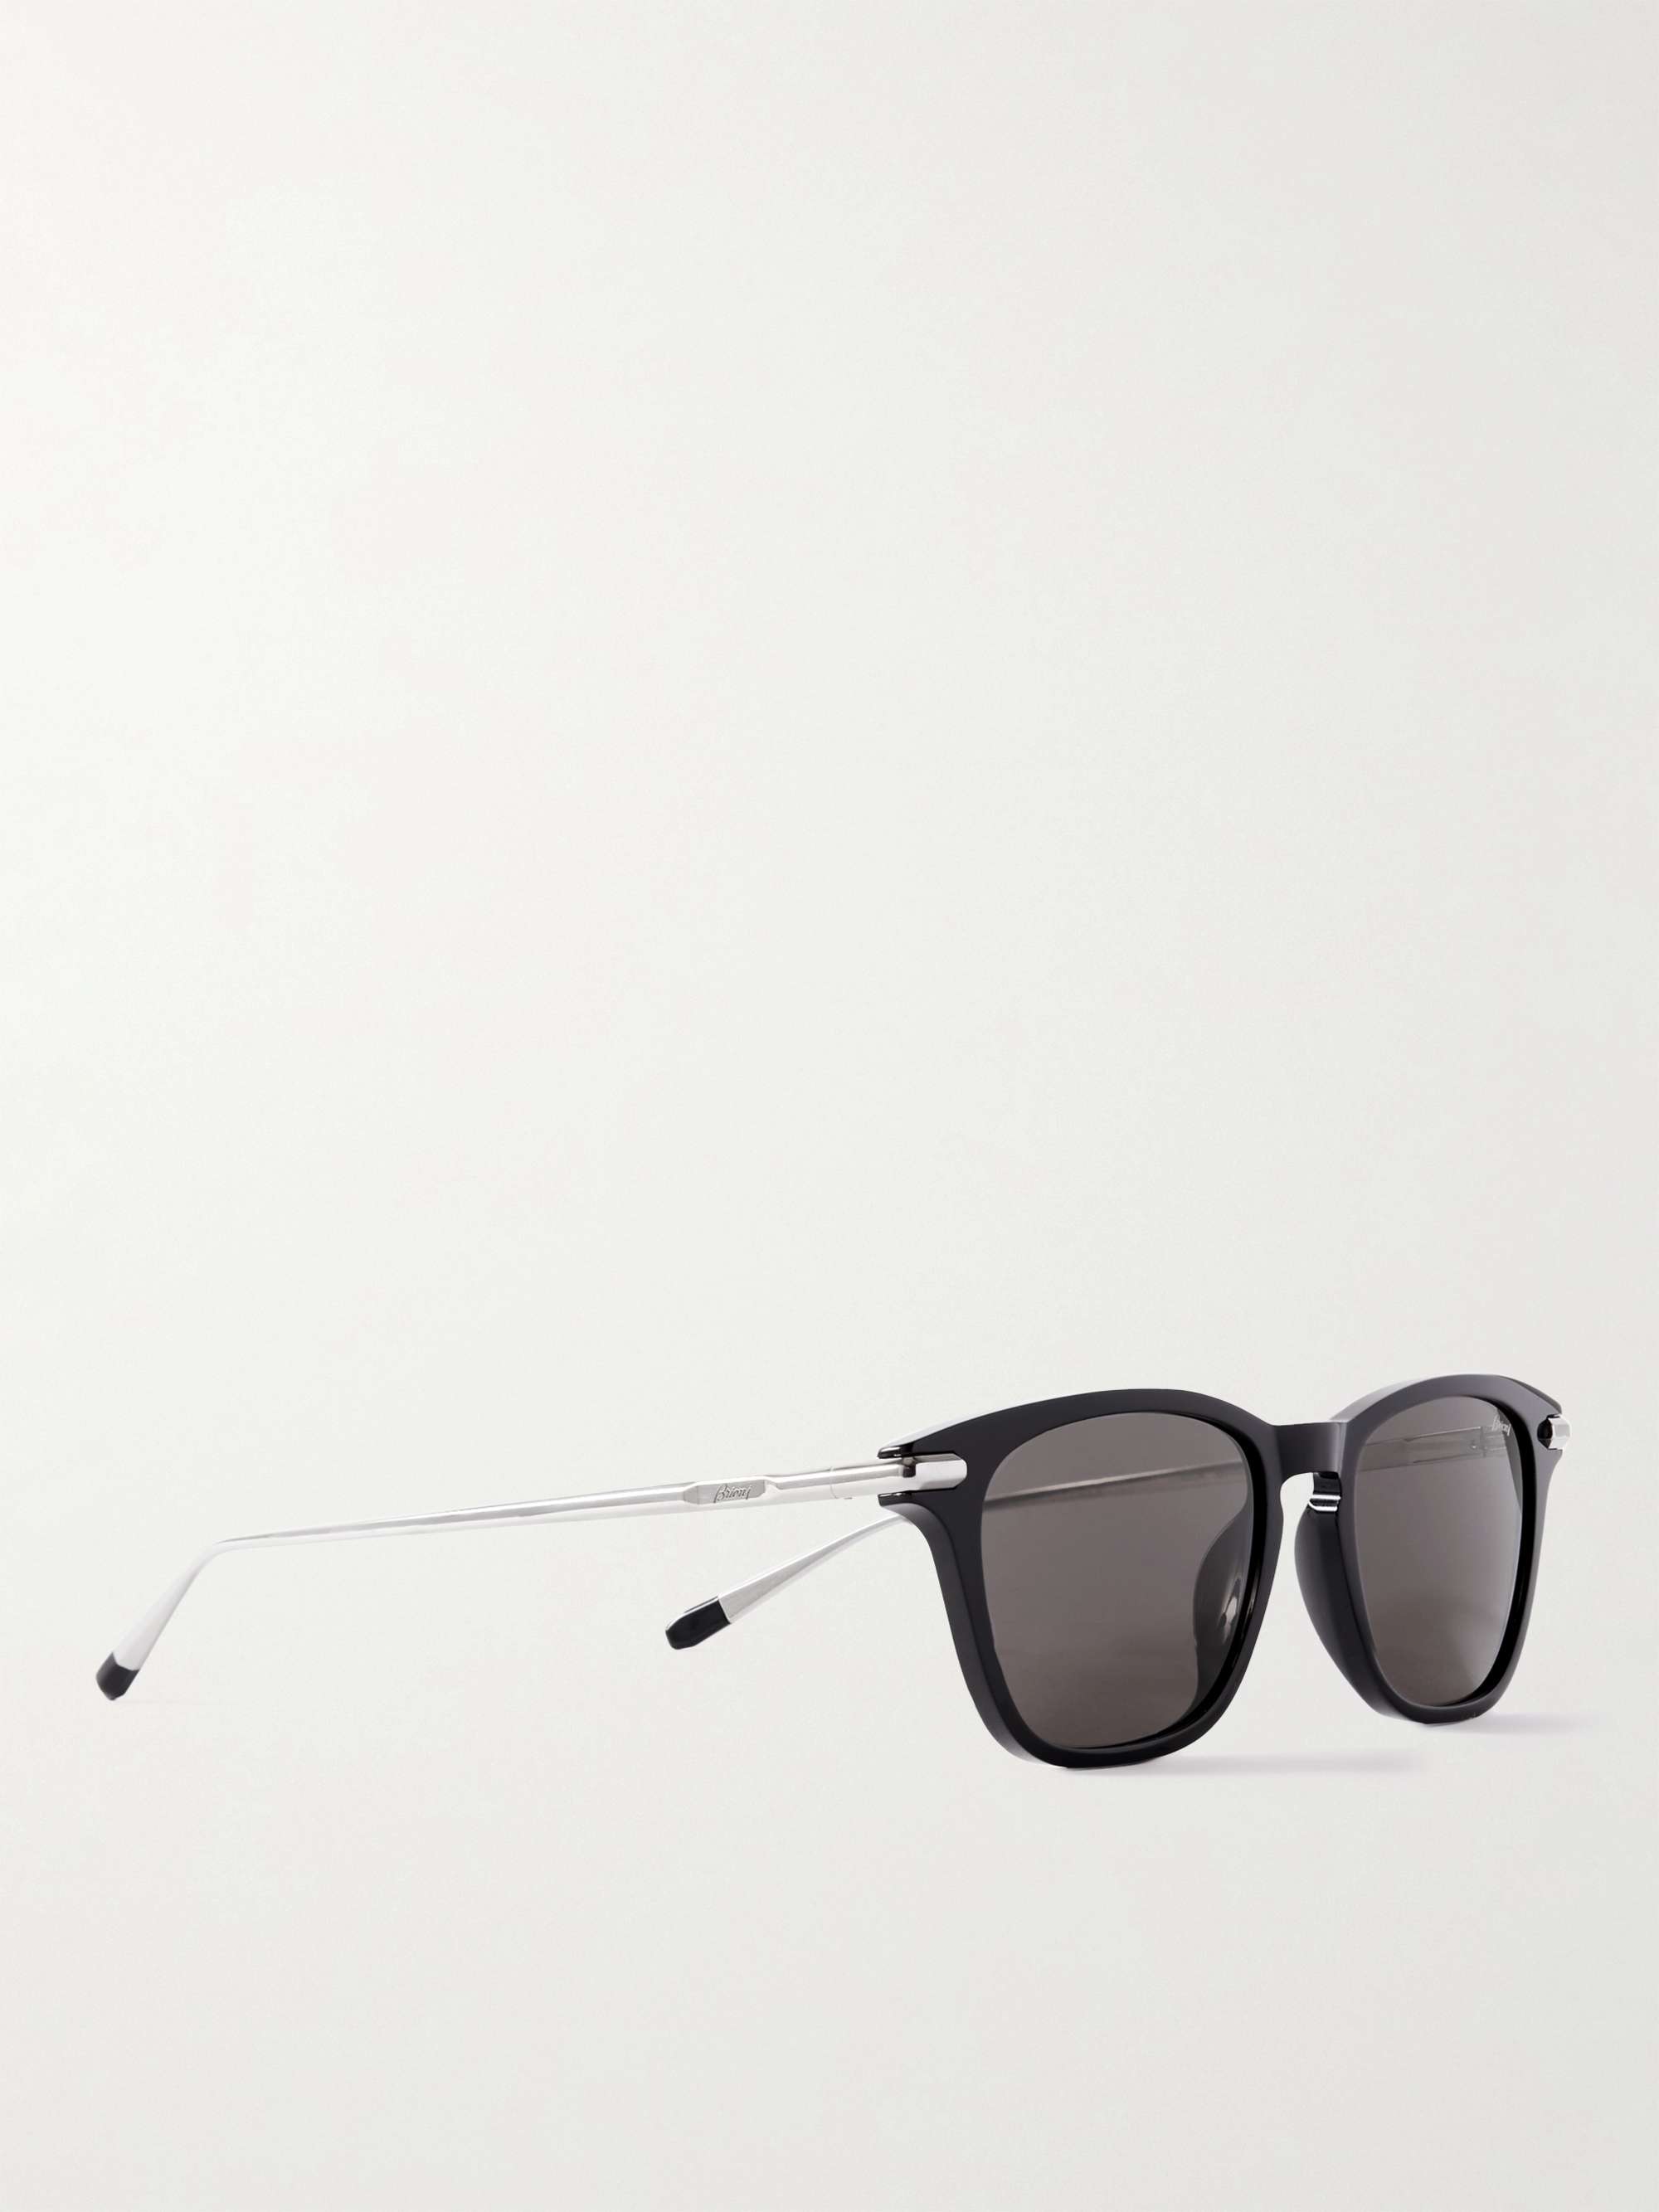 BRIONI D-Frame Tortoiseshell Acetate and Silver-Tone Sunglasses